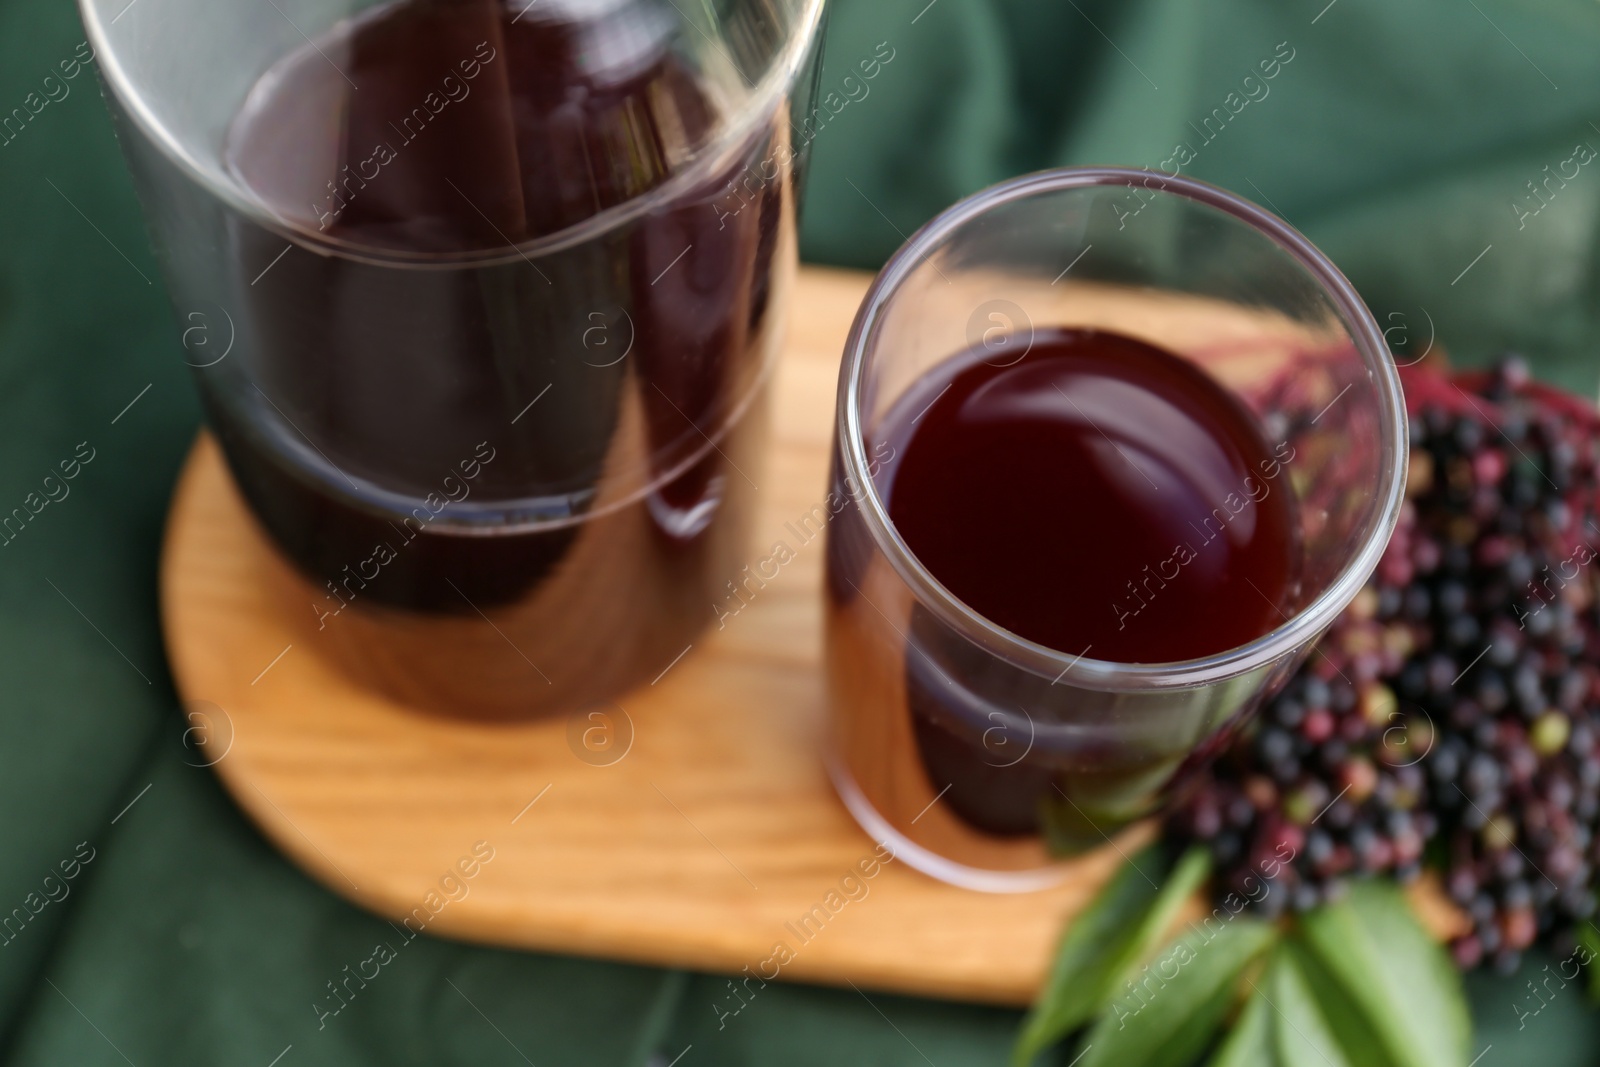 Photo of Elderberry drink and Sambucus berries on table, closeup